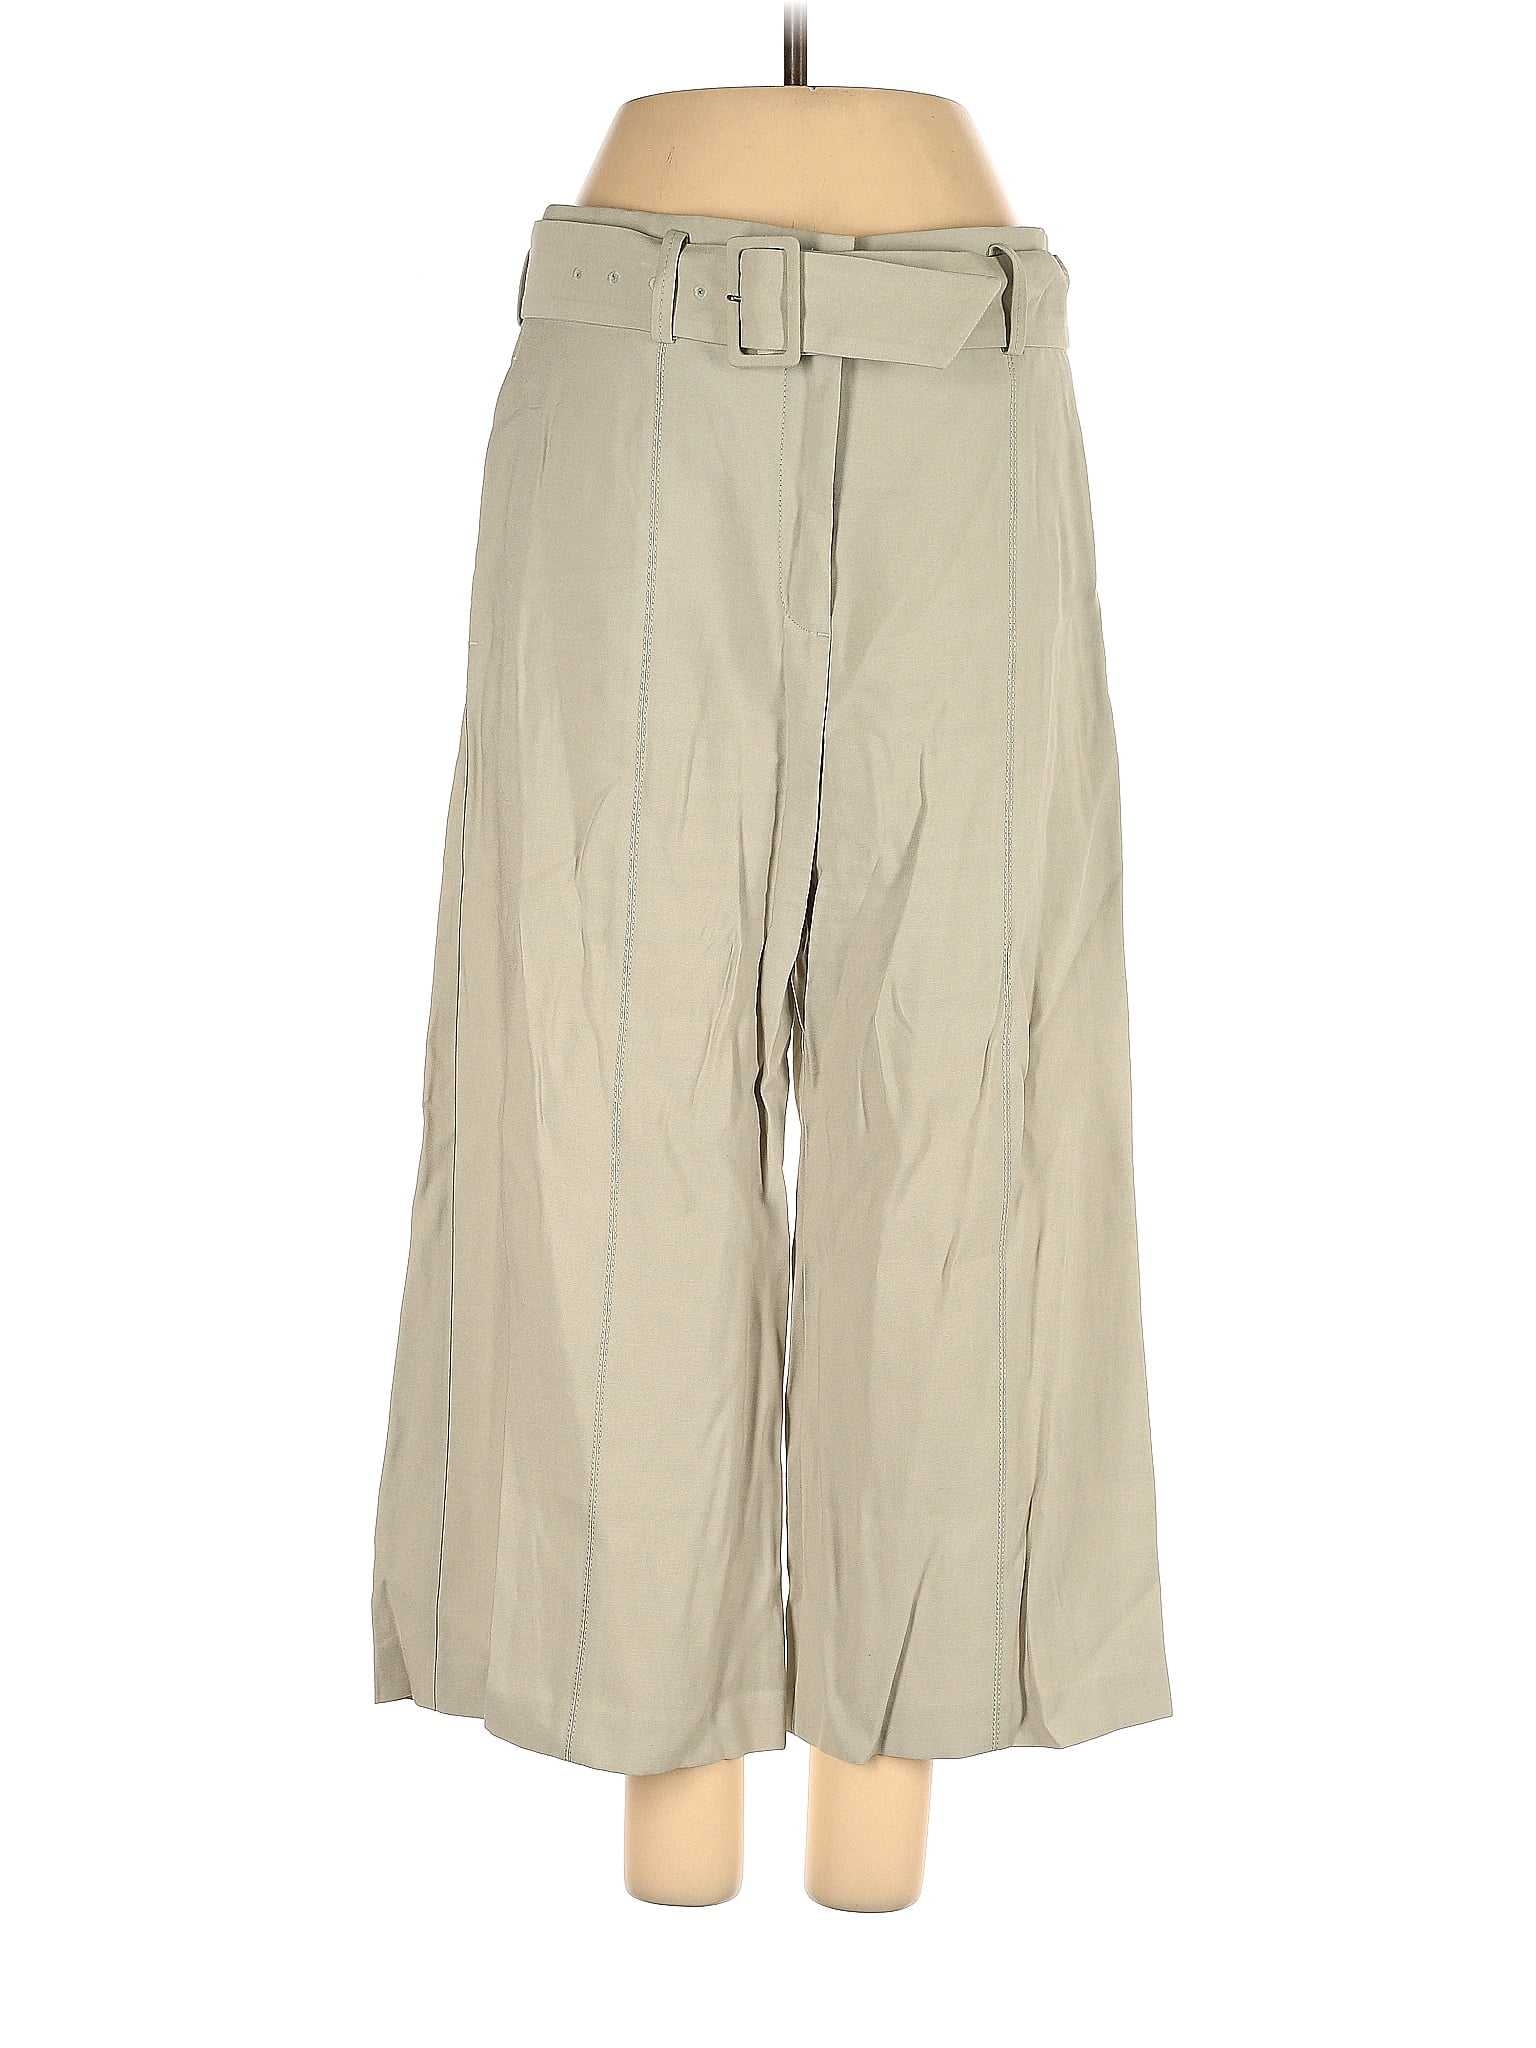 Ann Taylor Solid Tan Dress Pants Size 2 (Petite) - 80% off | thredUP